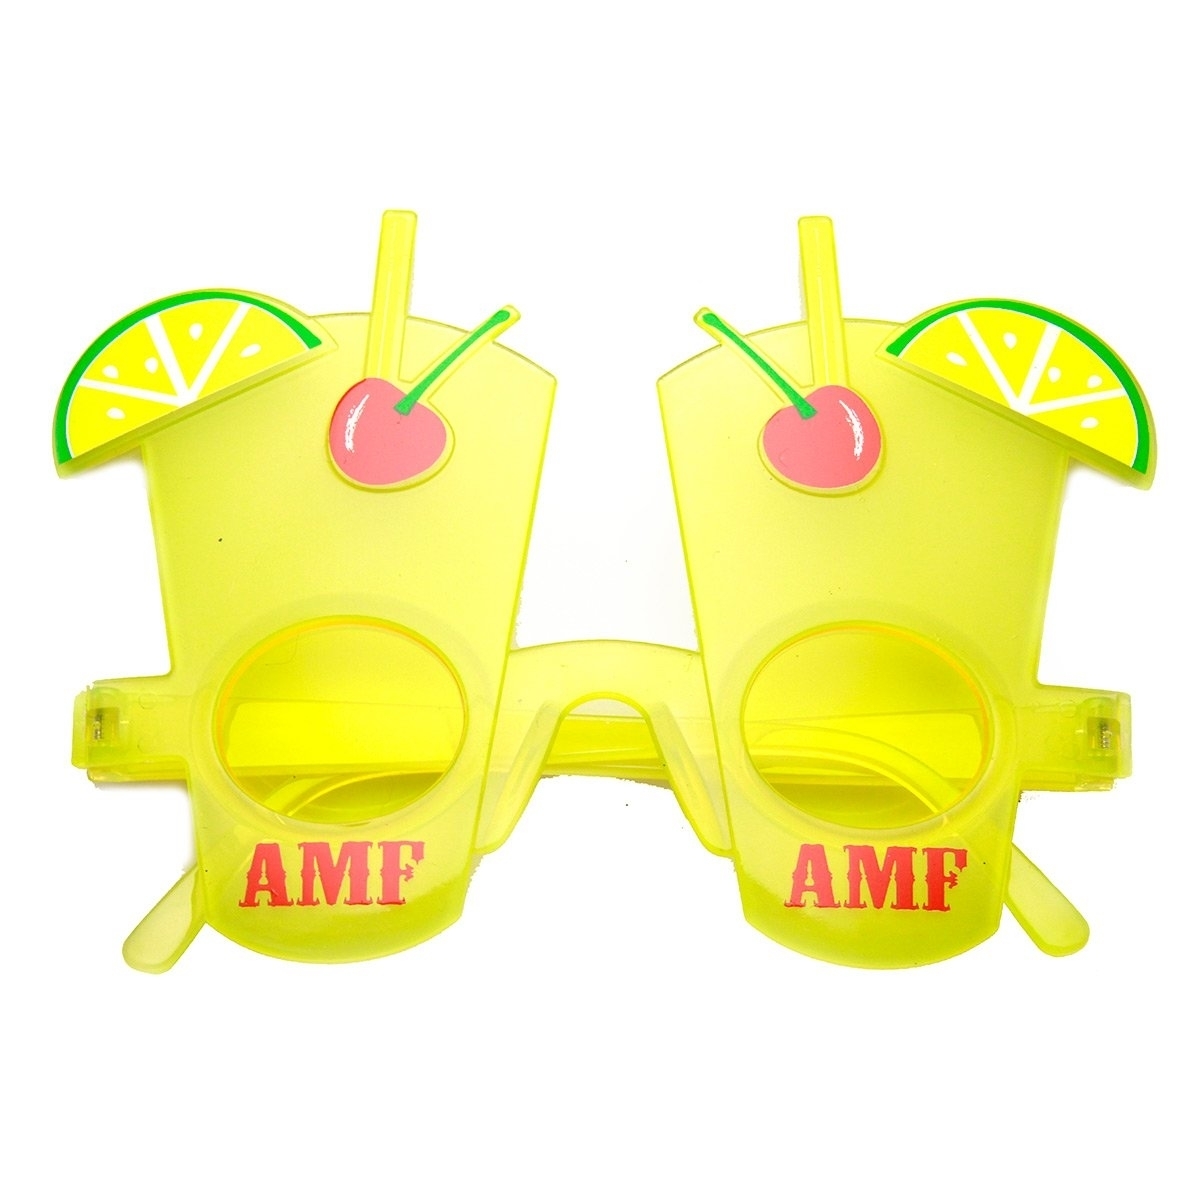 AMF Adios Cocktail Party Favor Drink Celebration Novelty Glasses - Pink